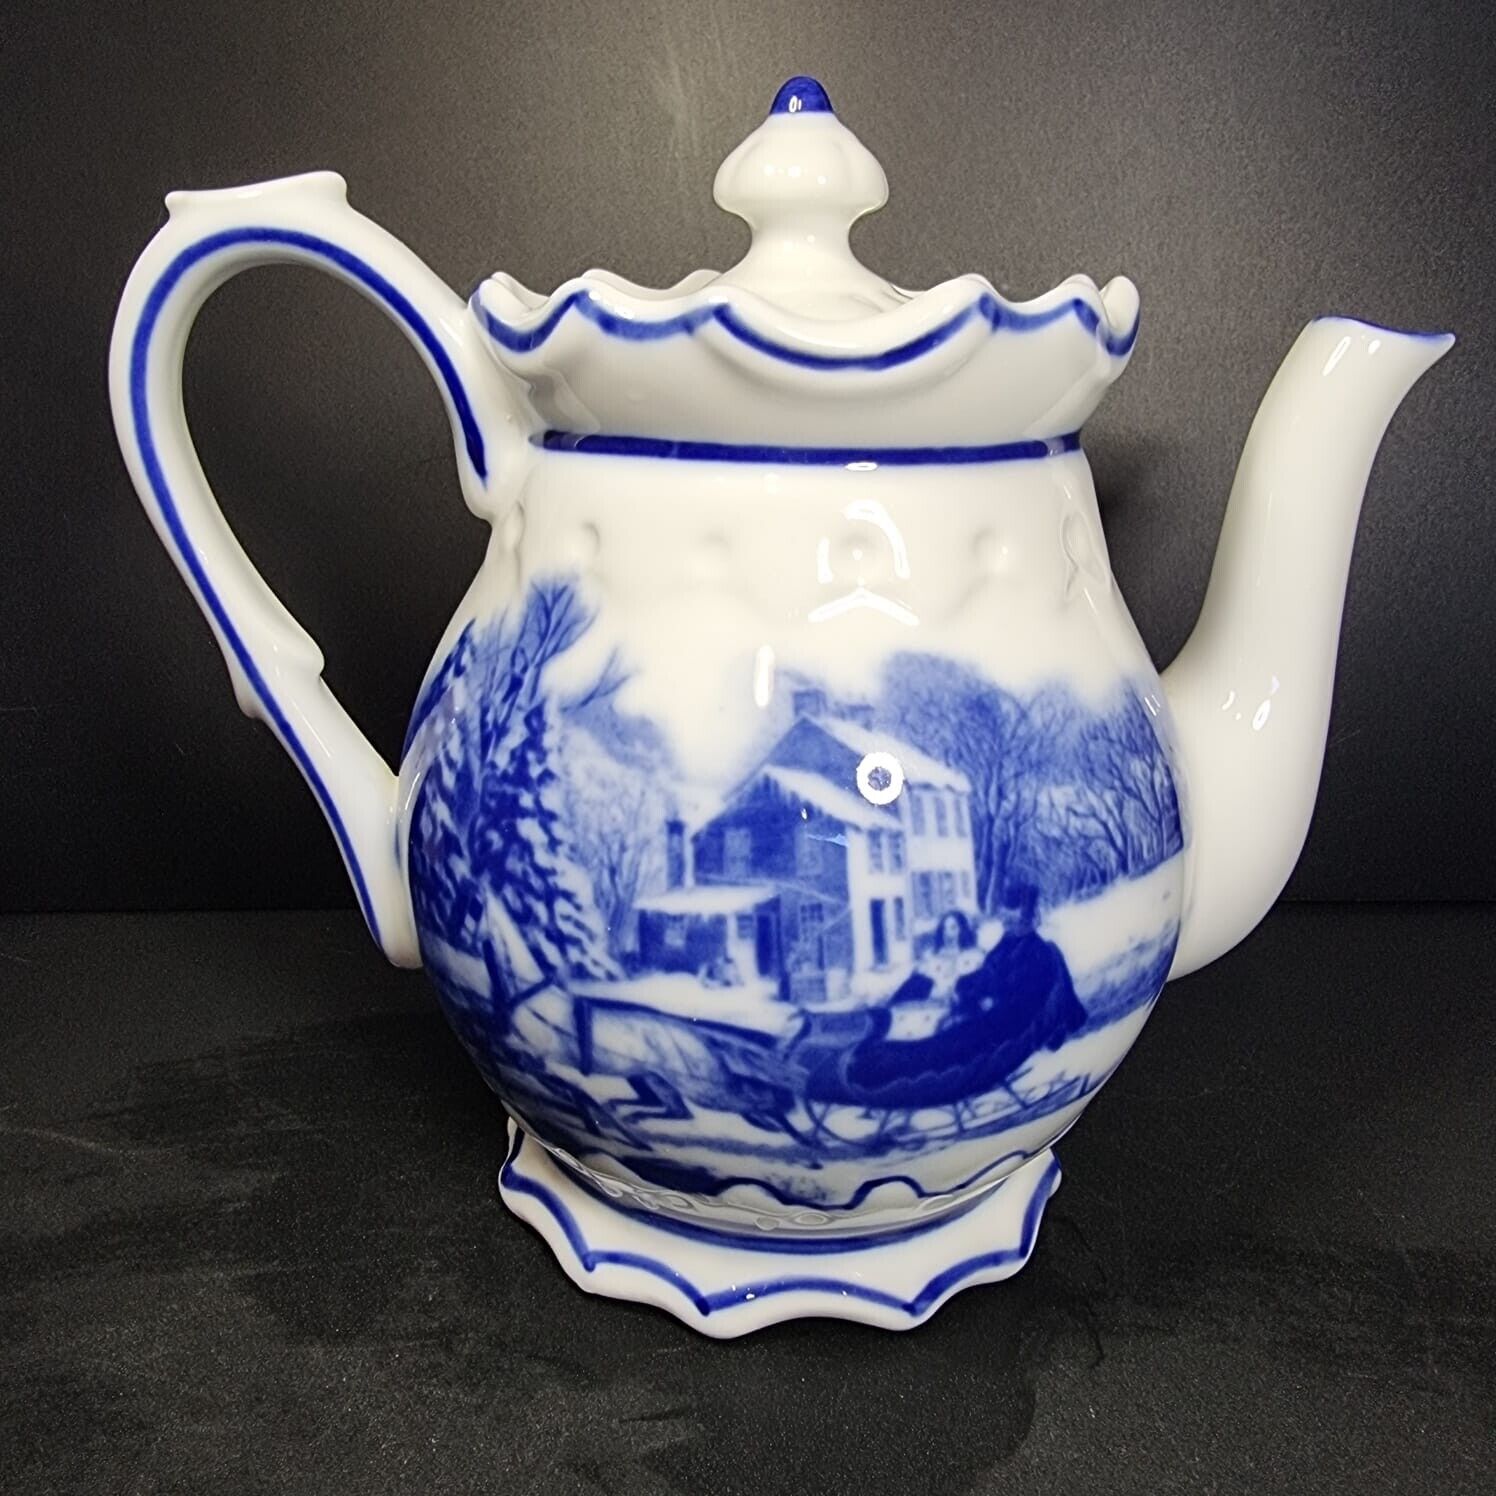 Tea Pot Cracker Barrel White Porcelain with a Blue Winter Homestead Scene